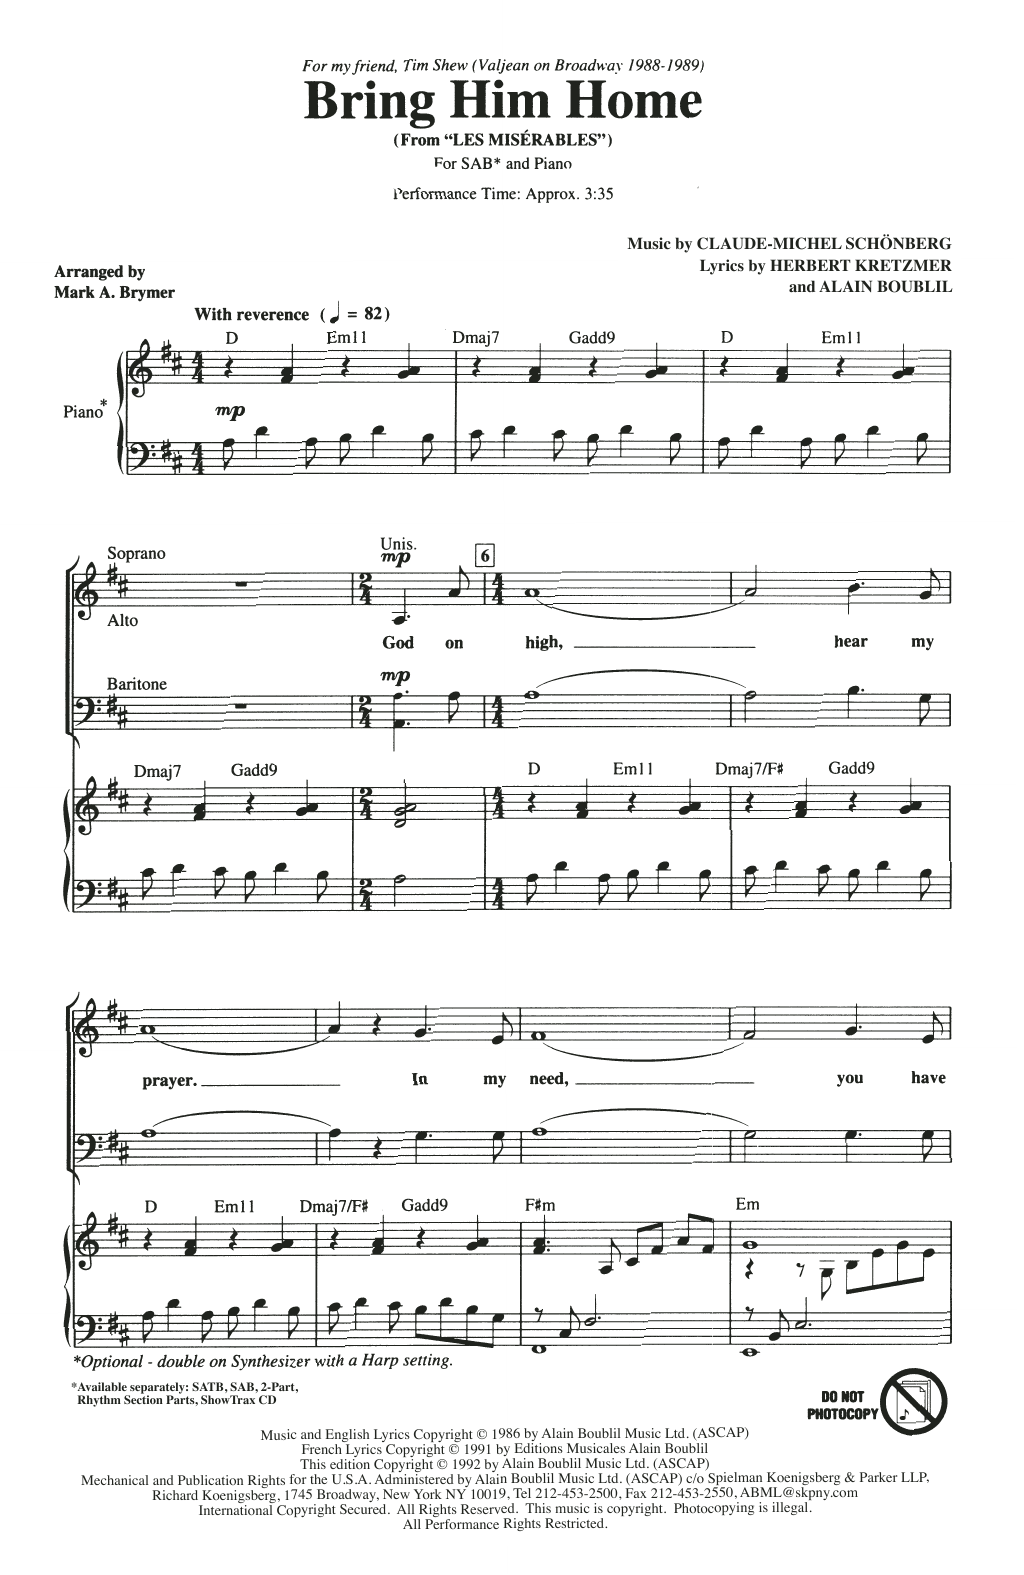 Boublil & Schonberg Bring Him Home (from Les Miserables) (arr. Mark Brymer) Sheet Music Notes & Chords for SAB Choir - Download or Print PDF